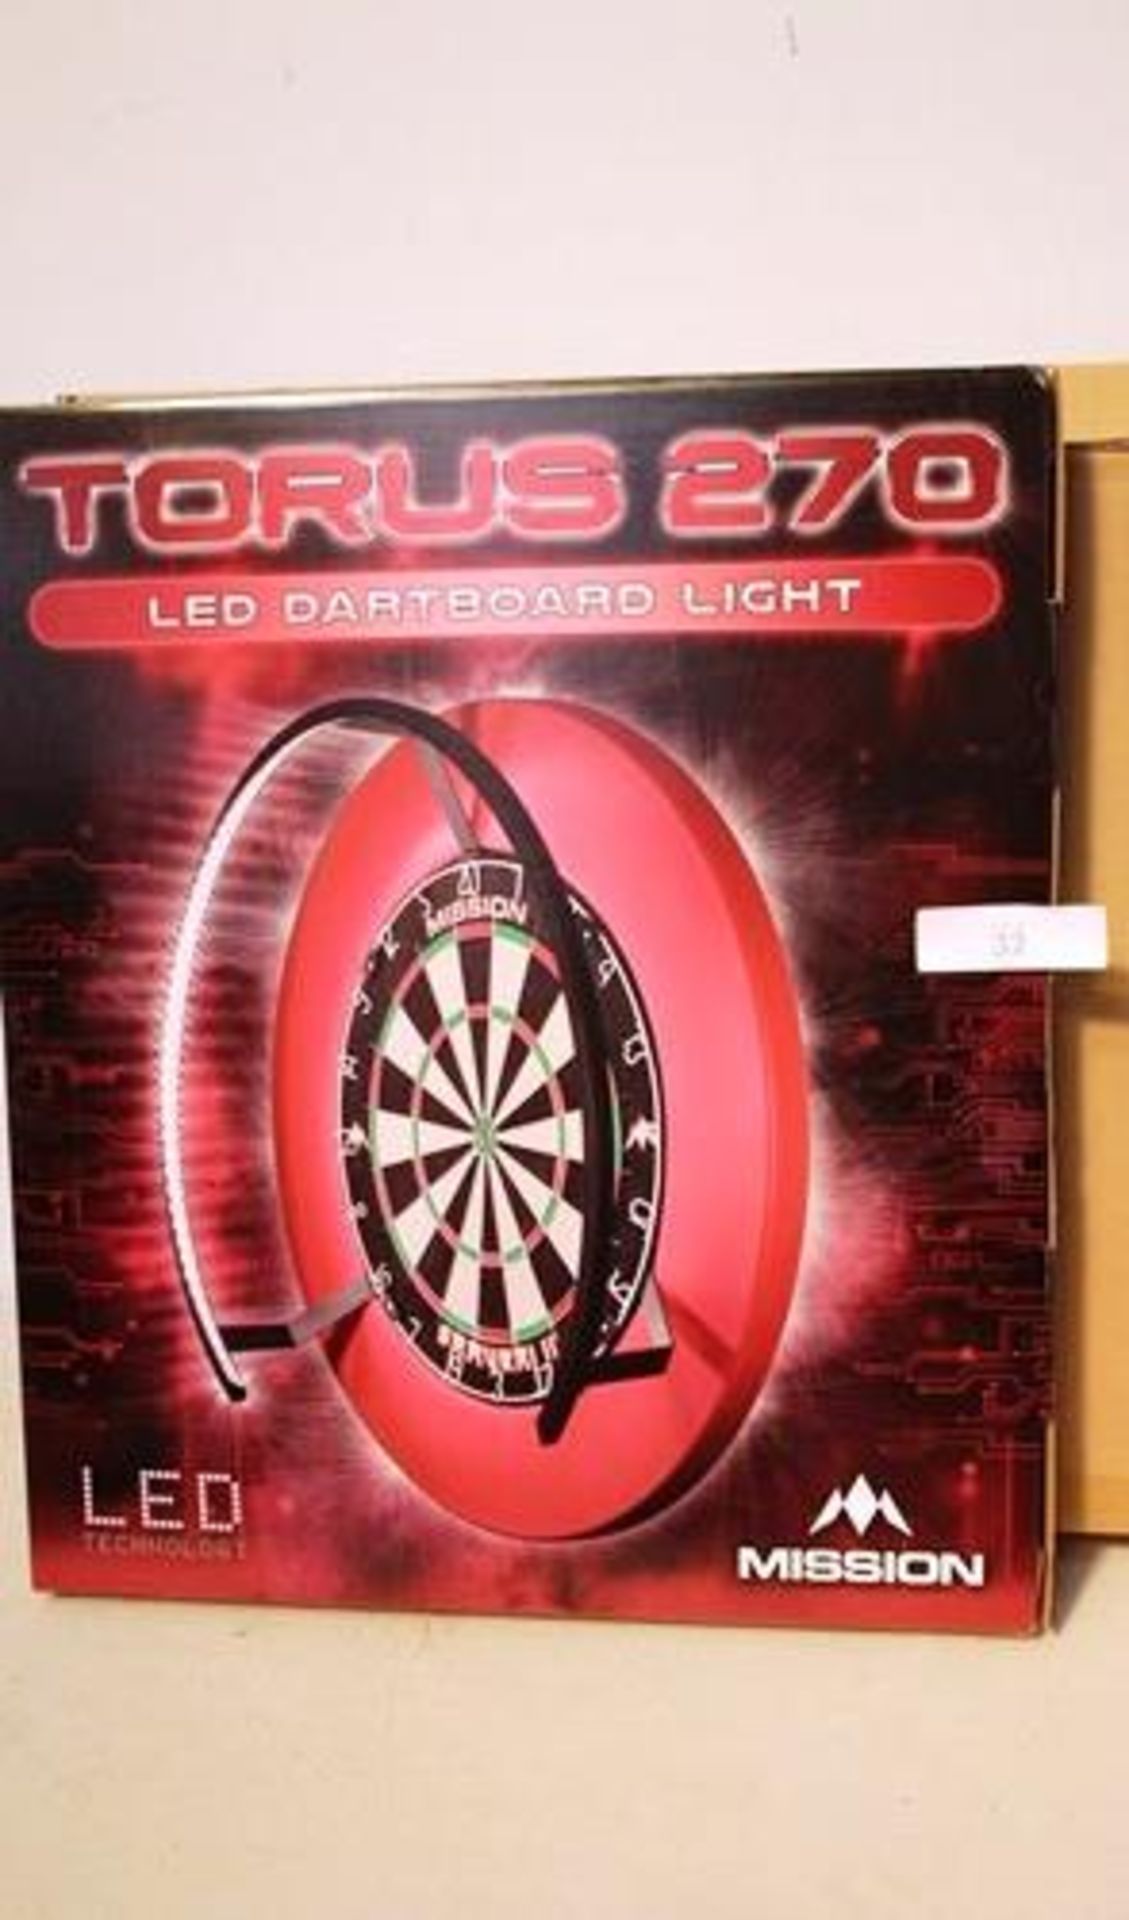 2 x Torus 270 LED dartboard lights - New (ES2)